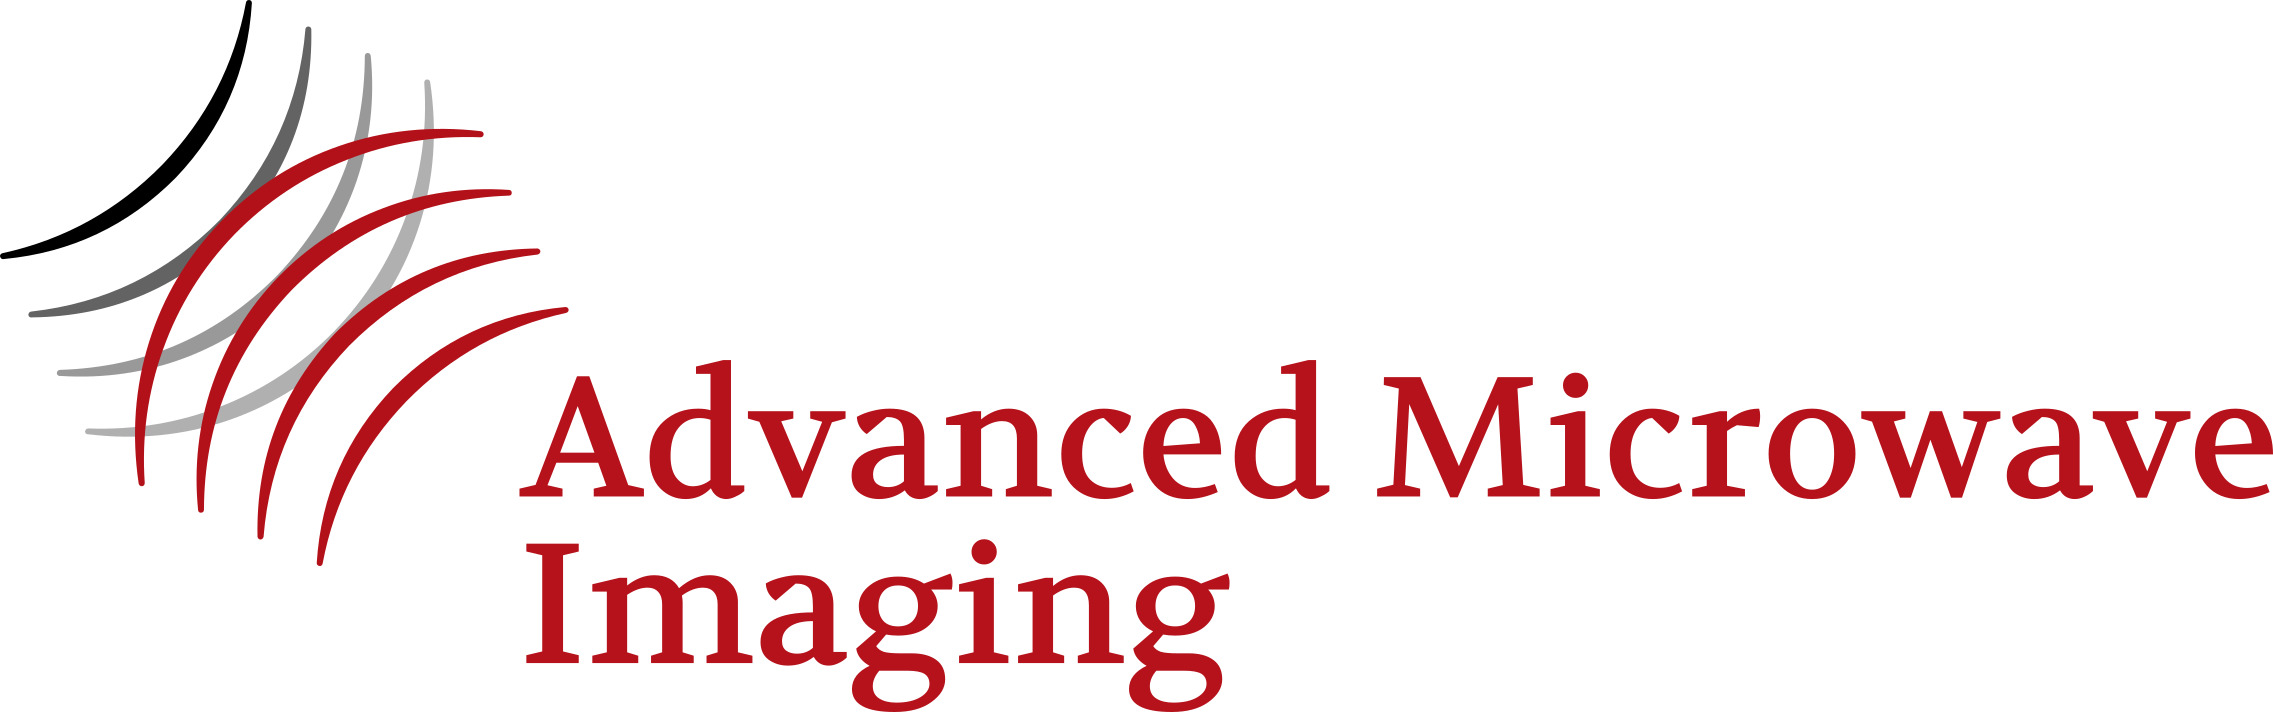 Advanced Microwave Imaging logo